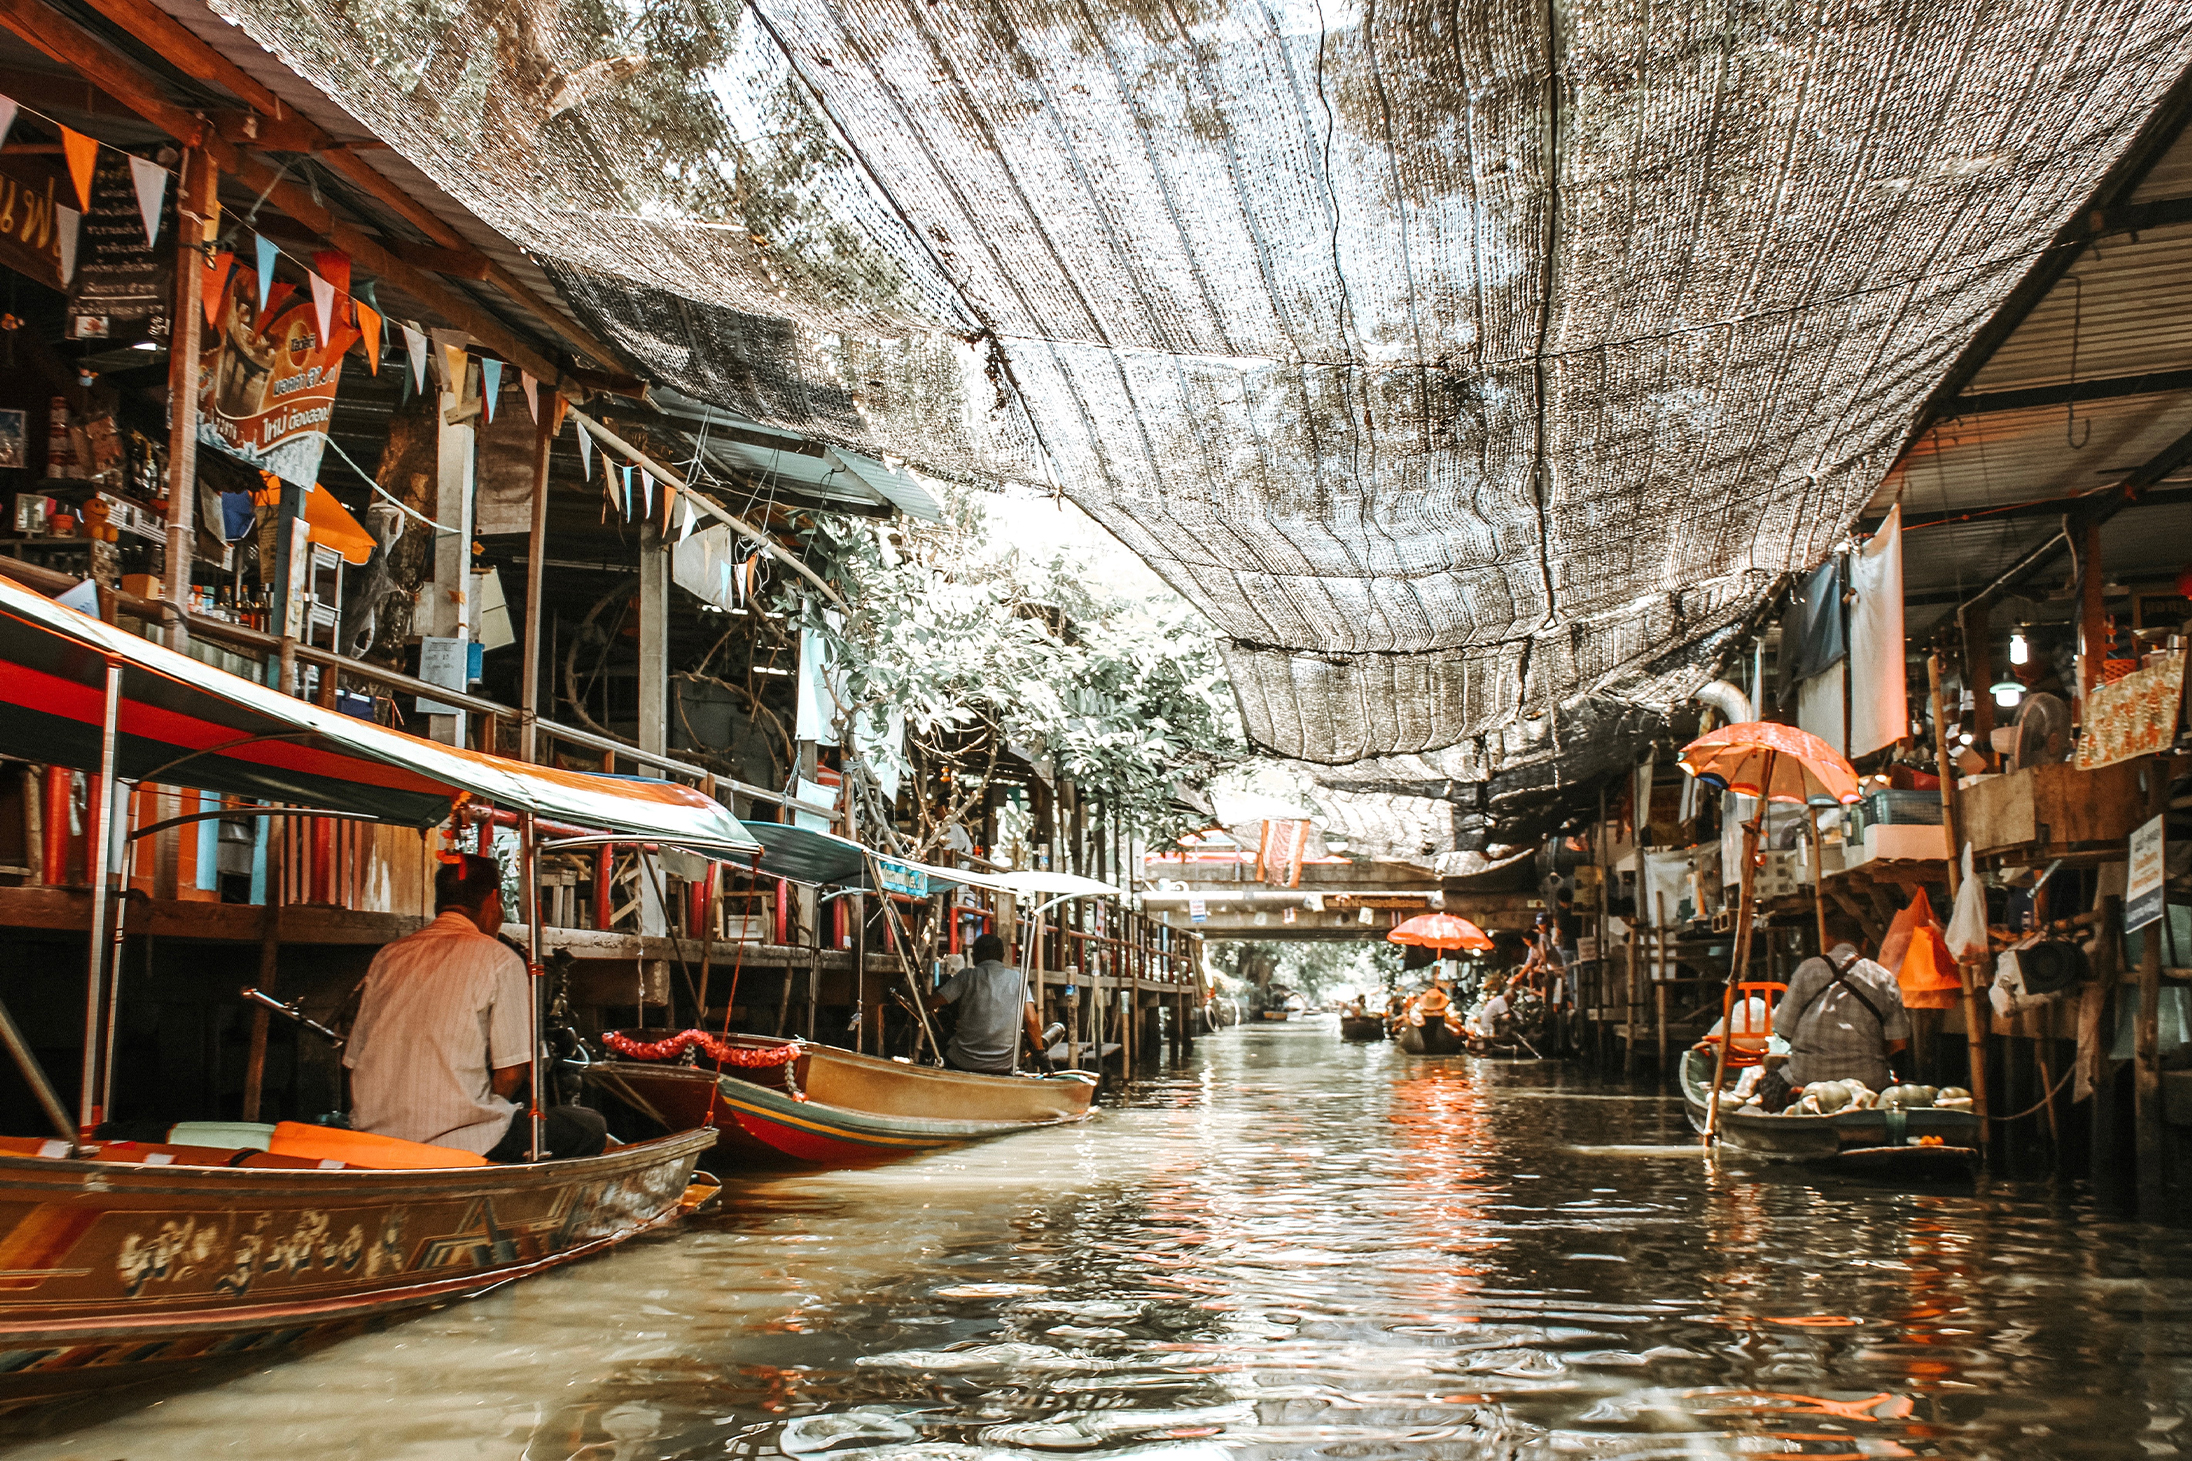 Culture trips around the world, Bangkok